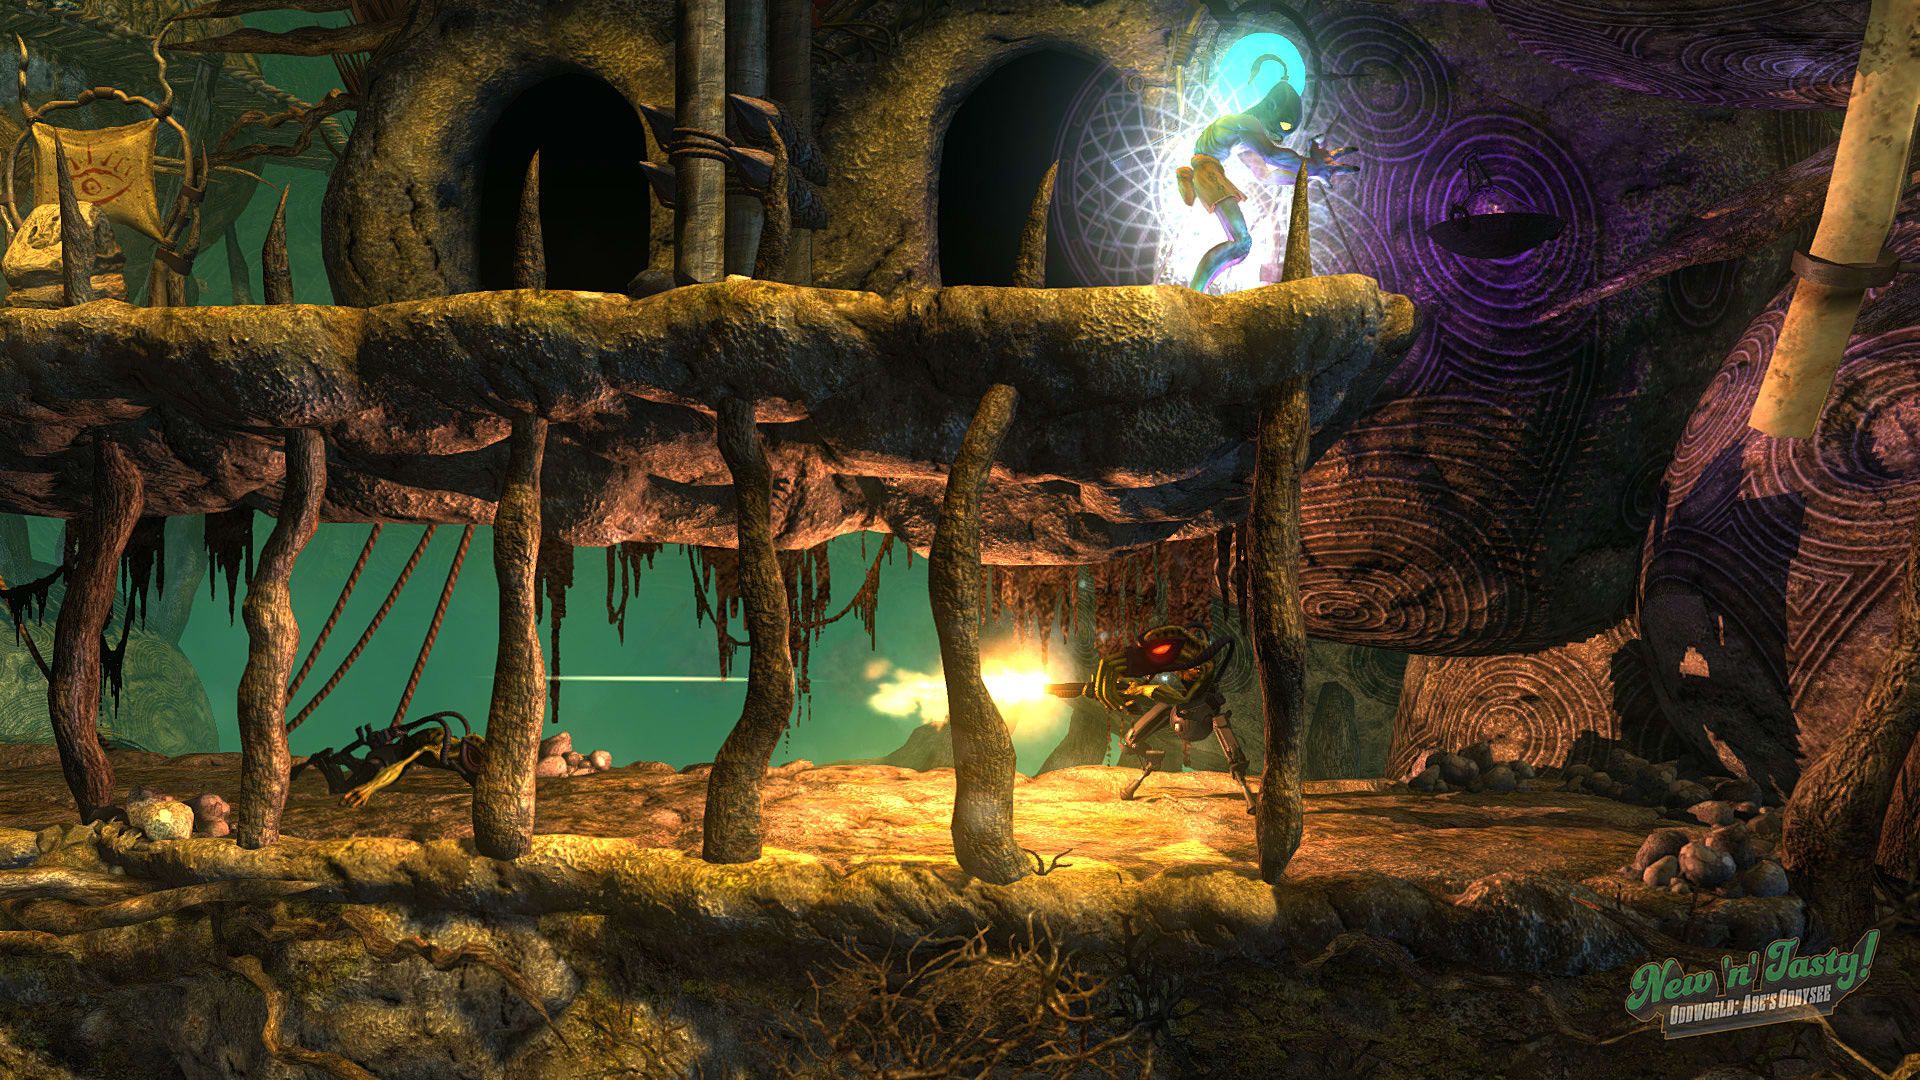 Oddworld Soulstorm, A Brand New Oddworld Game, Gets Cinematic Teaser